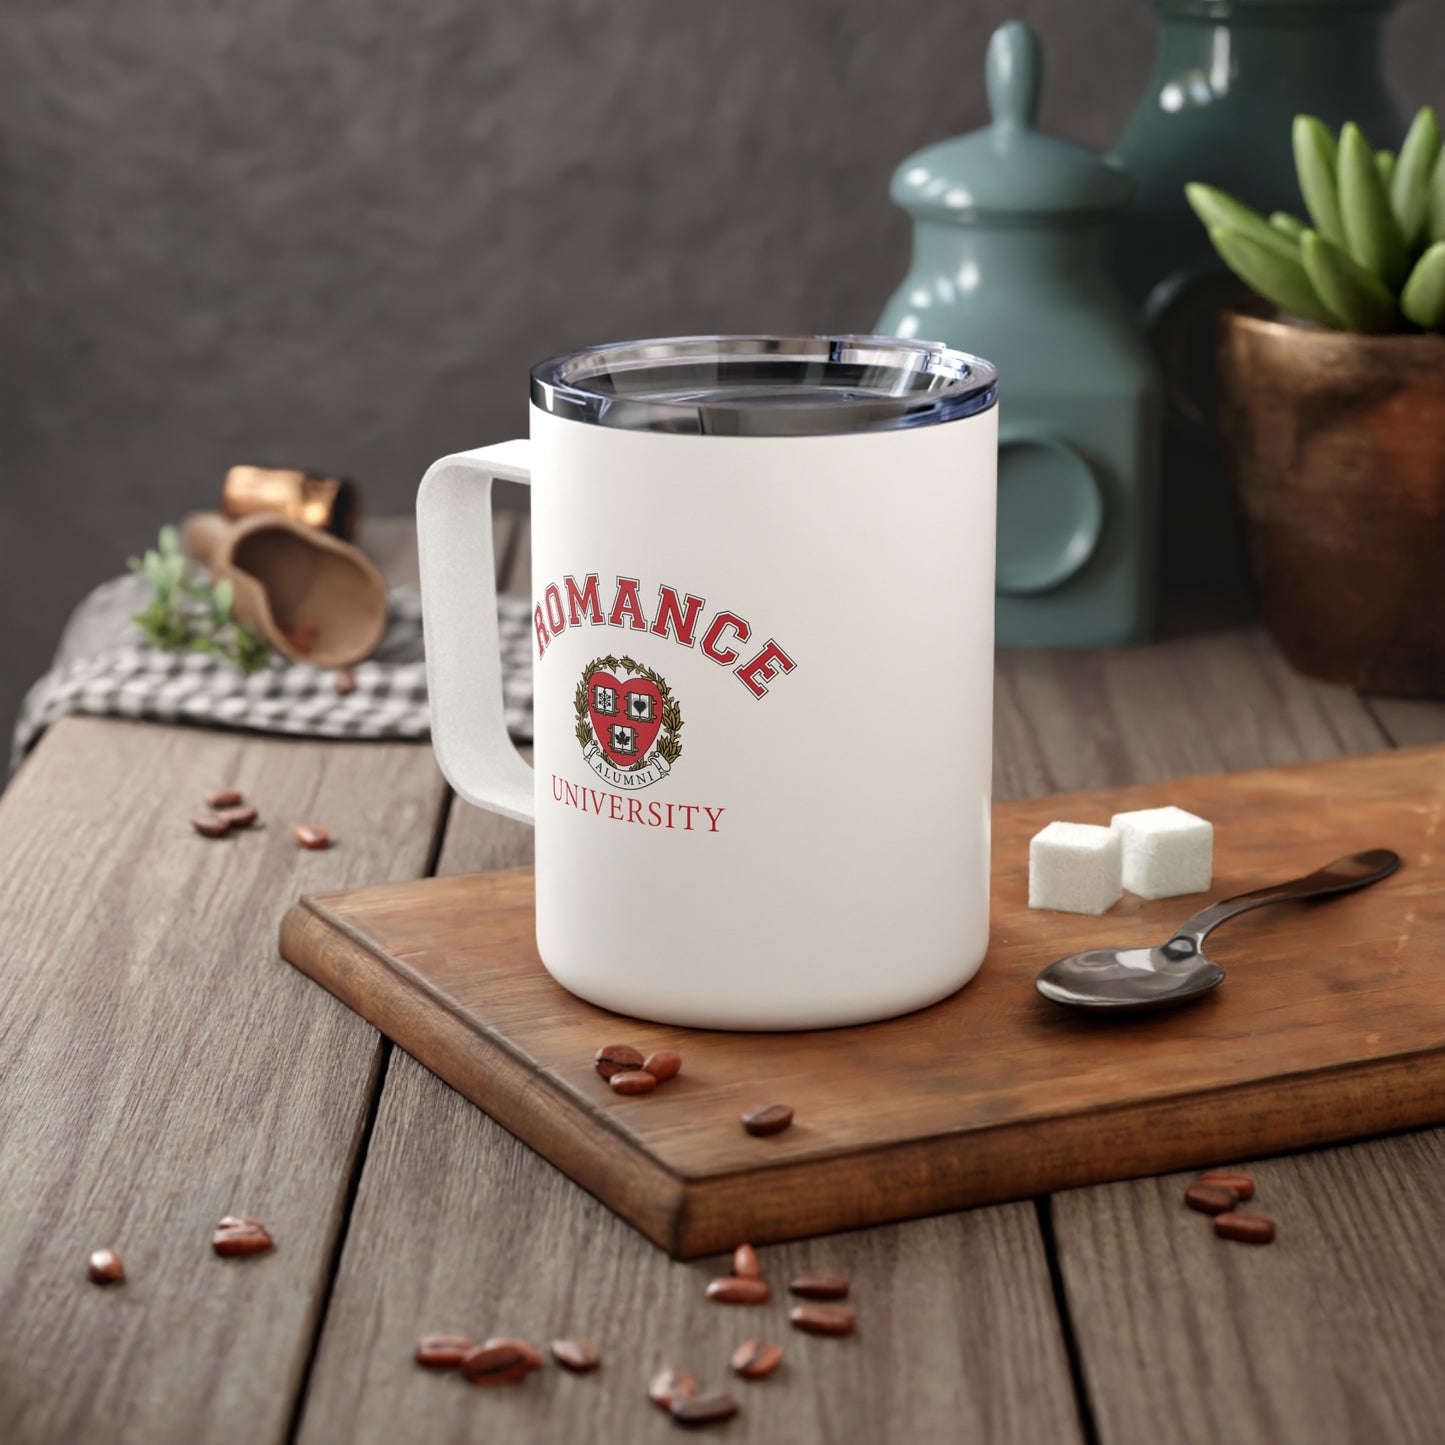 Romance University-Insulated Coffee Mug, 10oz